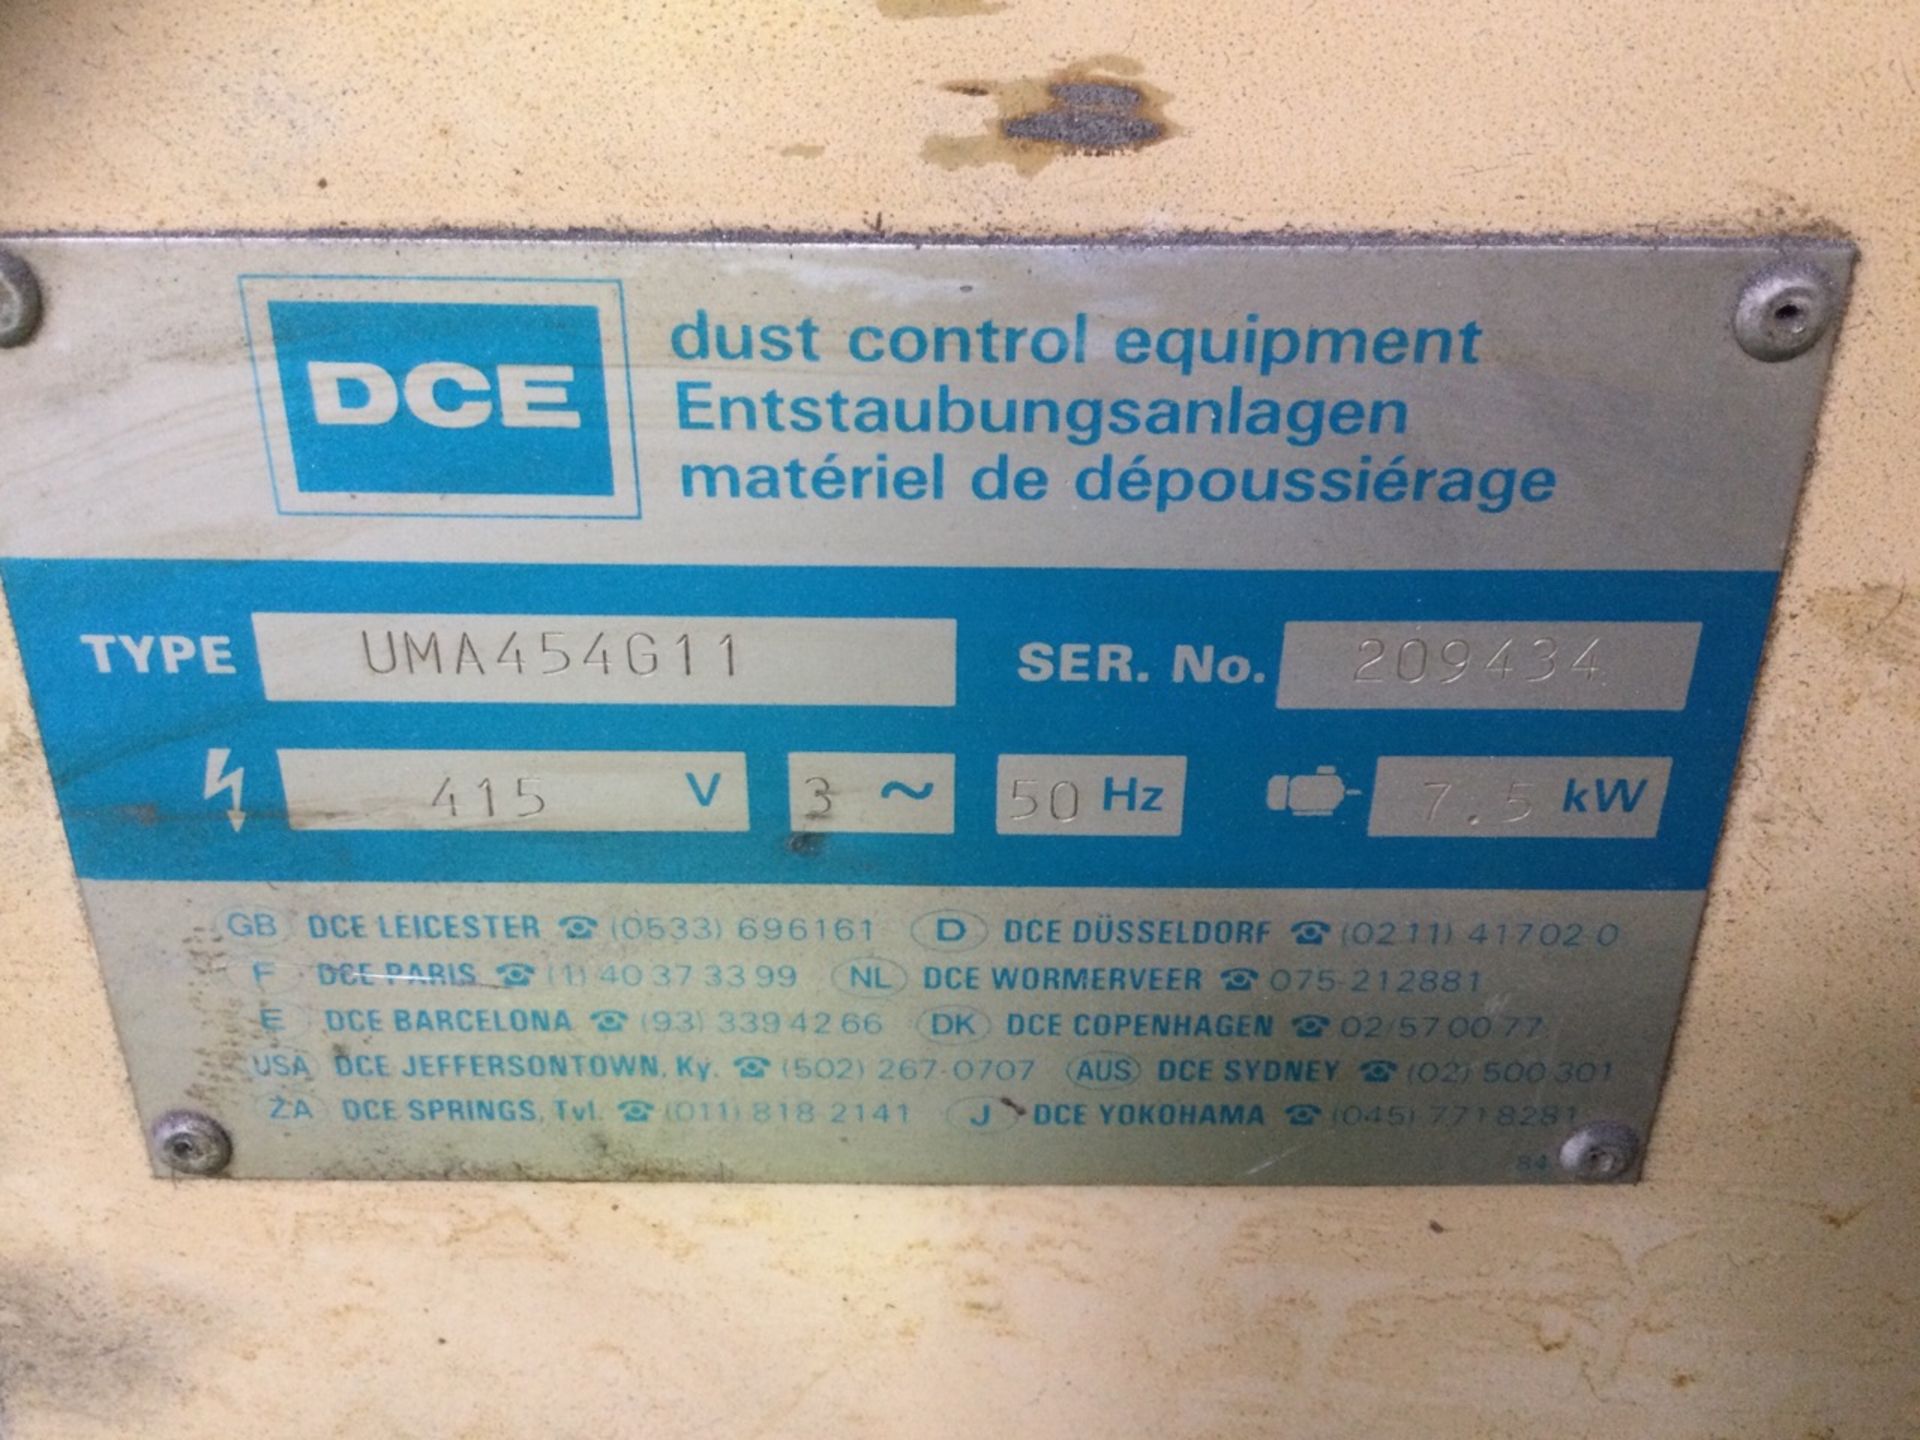 1 DCE Unimaster, UMA454/Gll , Twin bag dust extrac - Image 2 of 2